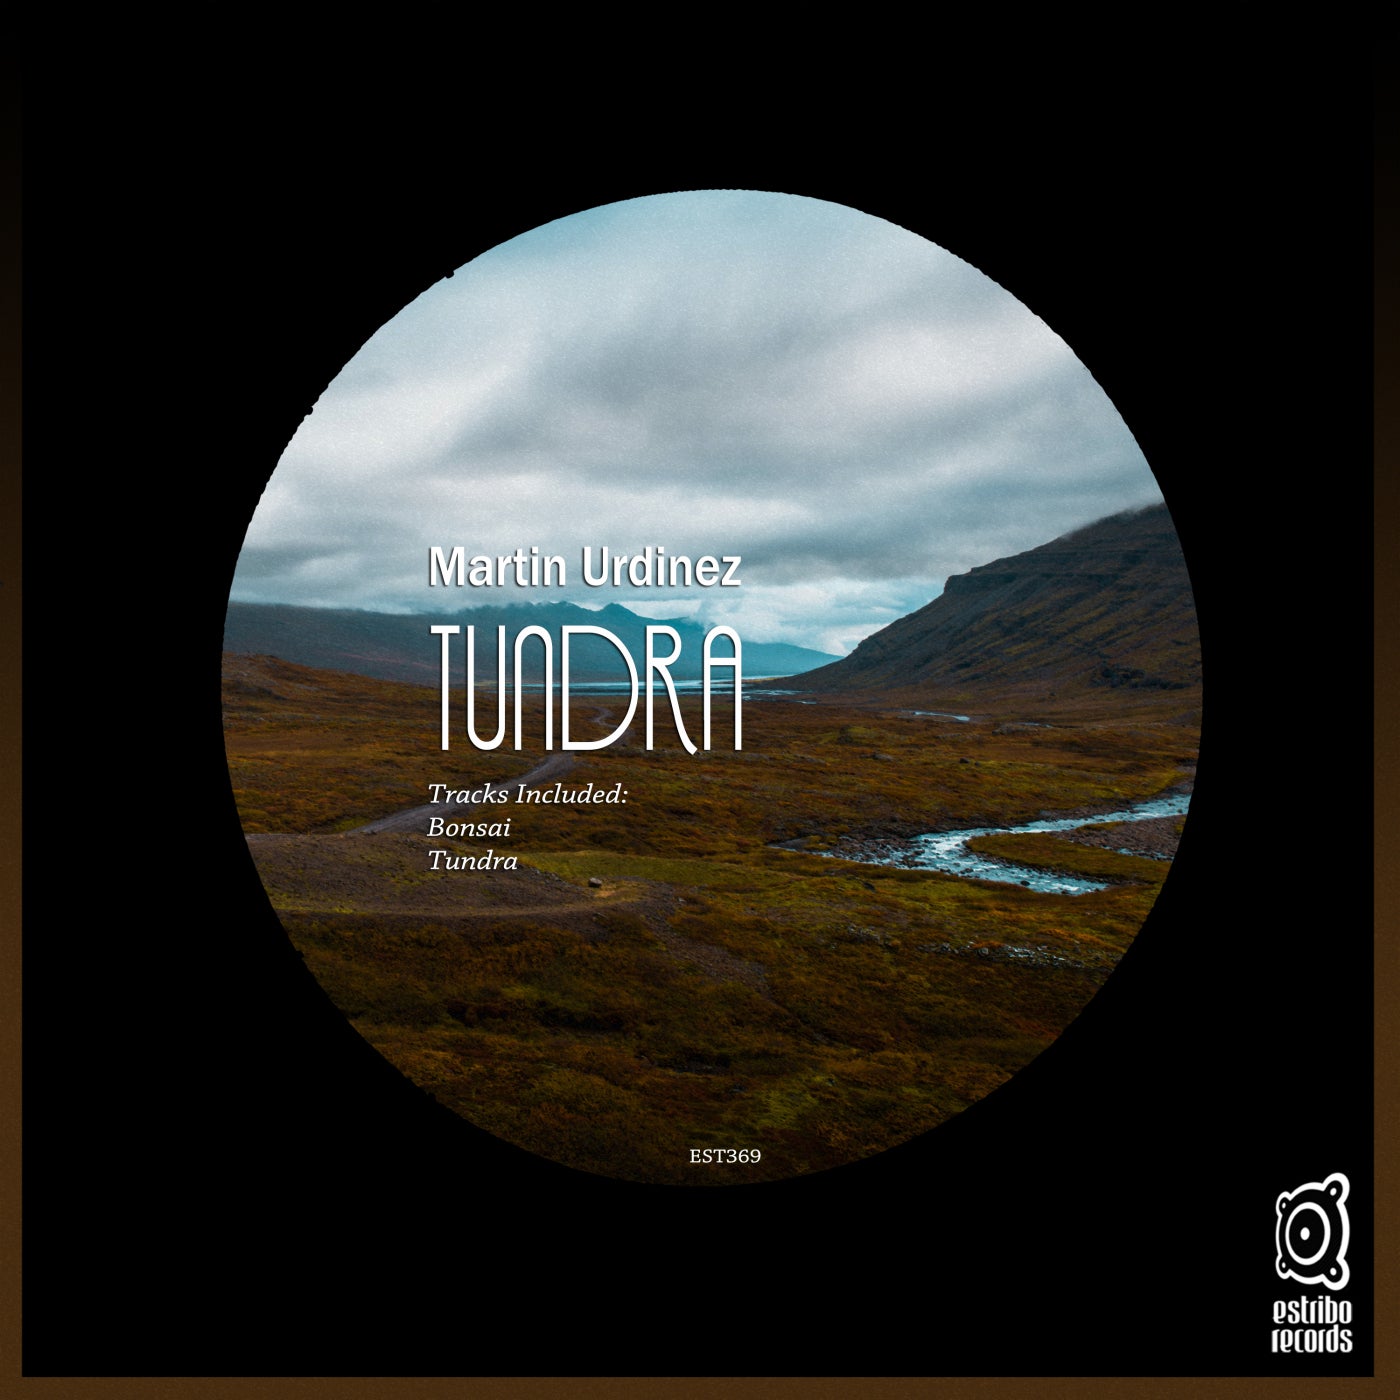 Martin Urdinez - Tundra [EST369]